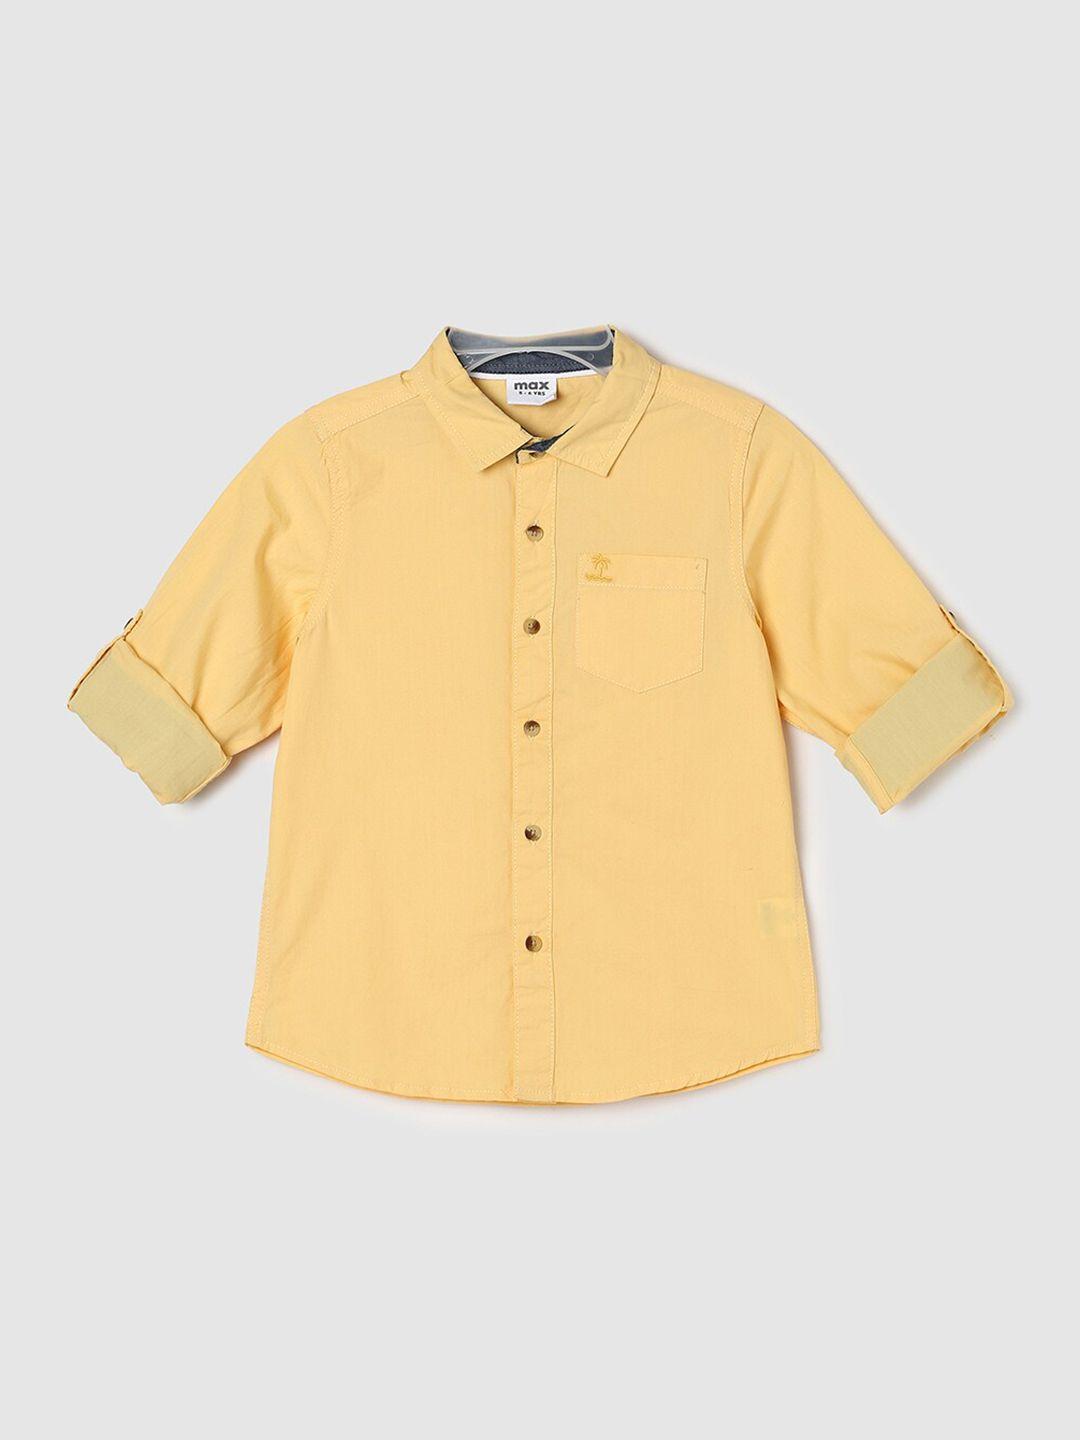 max-boys-opaque-pure-cotton-casual-shirt